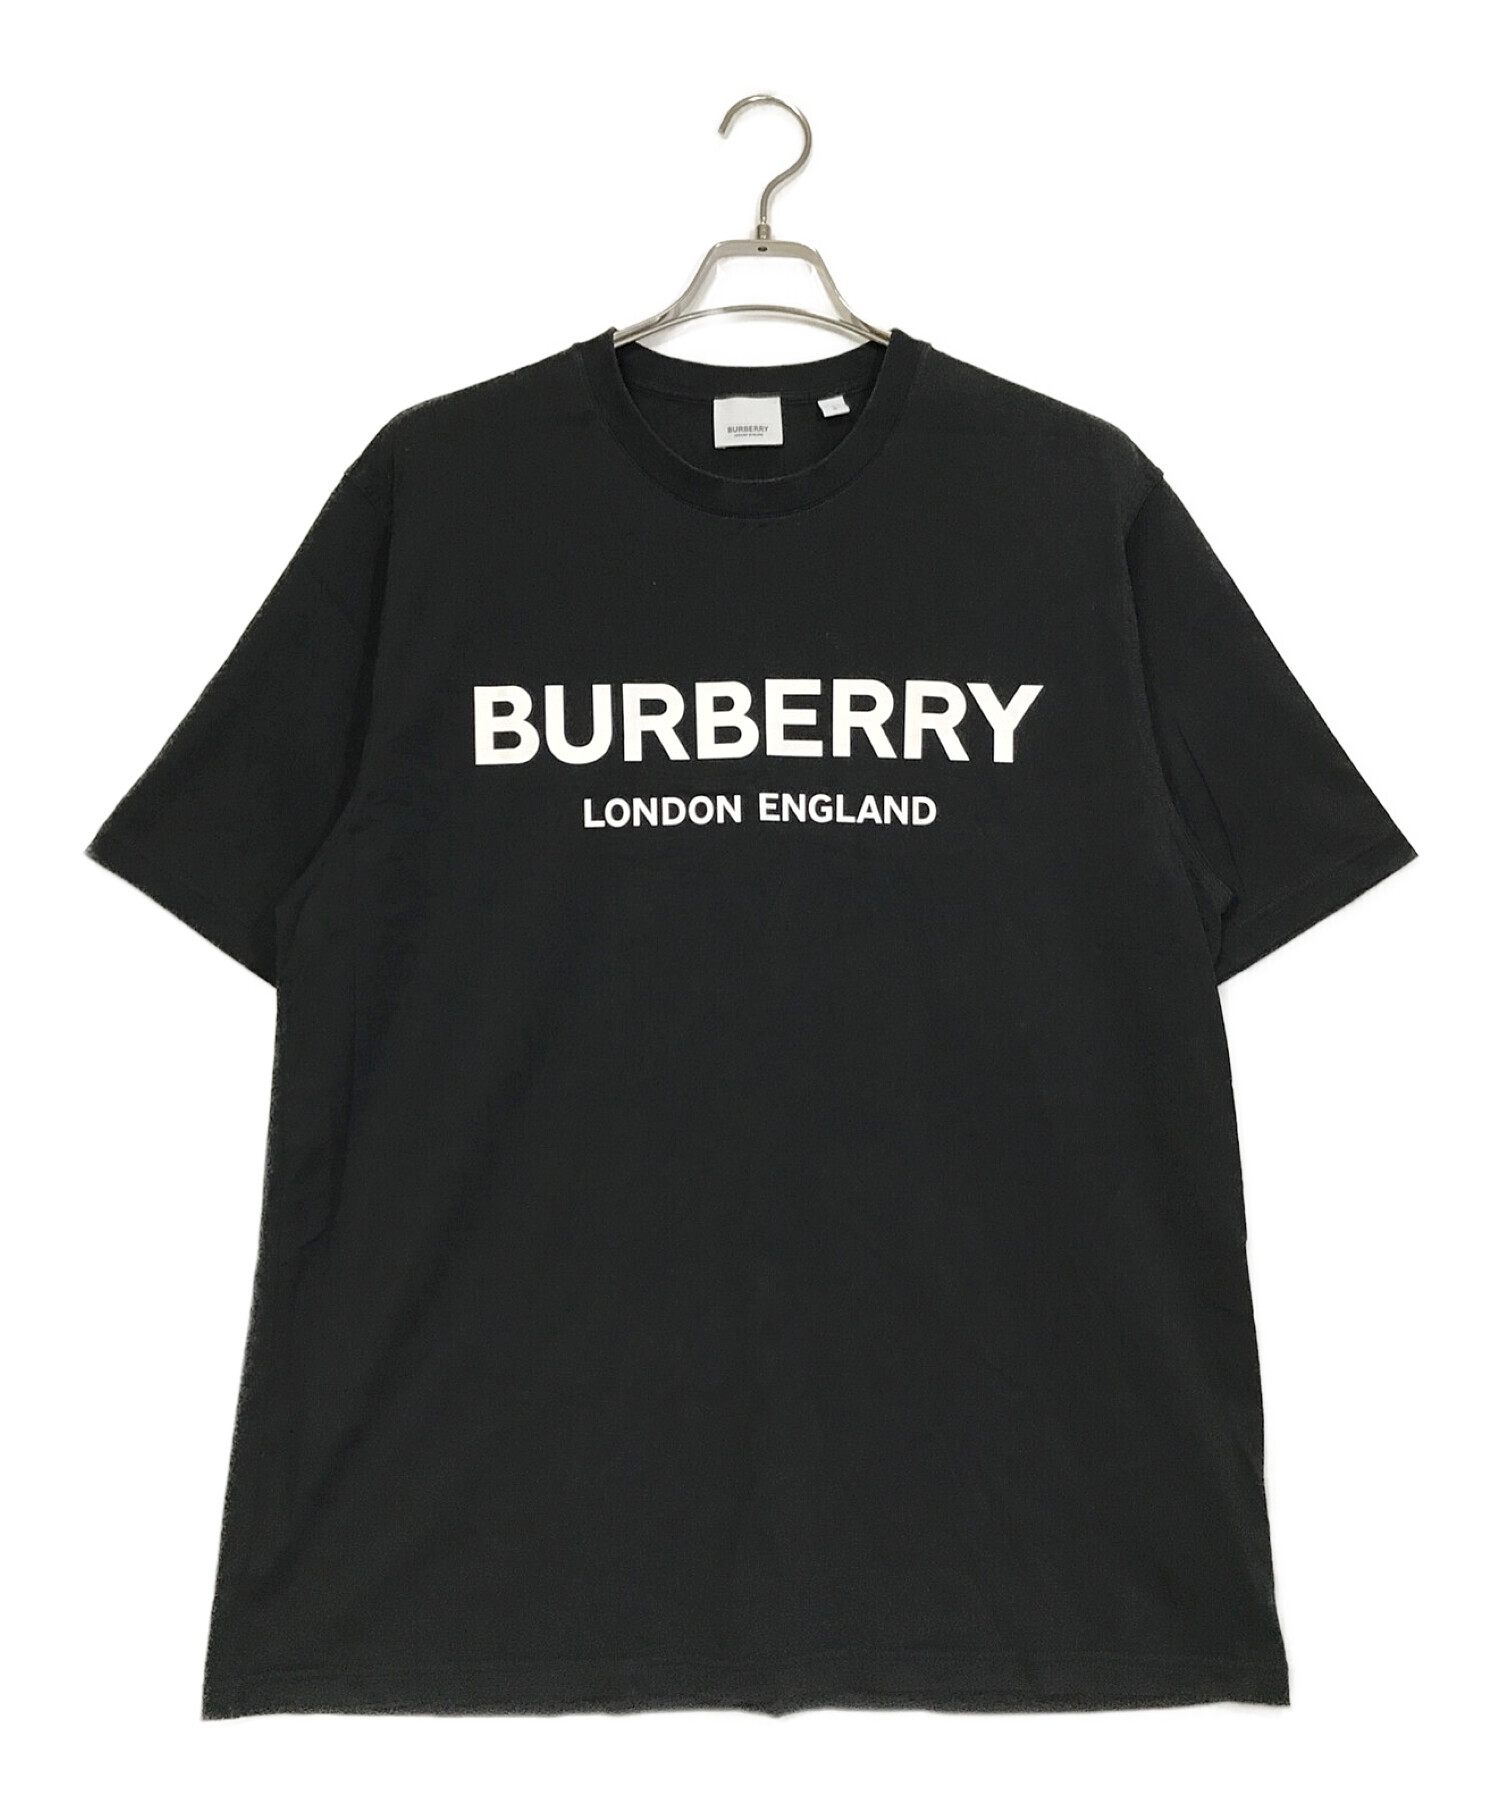 BURBERRY LONDON ENGLAND (バーバリー ロンドン イングランド) ロゴプリントクルーネックTシャツ ブラック サイズ:Ｌ